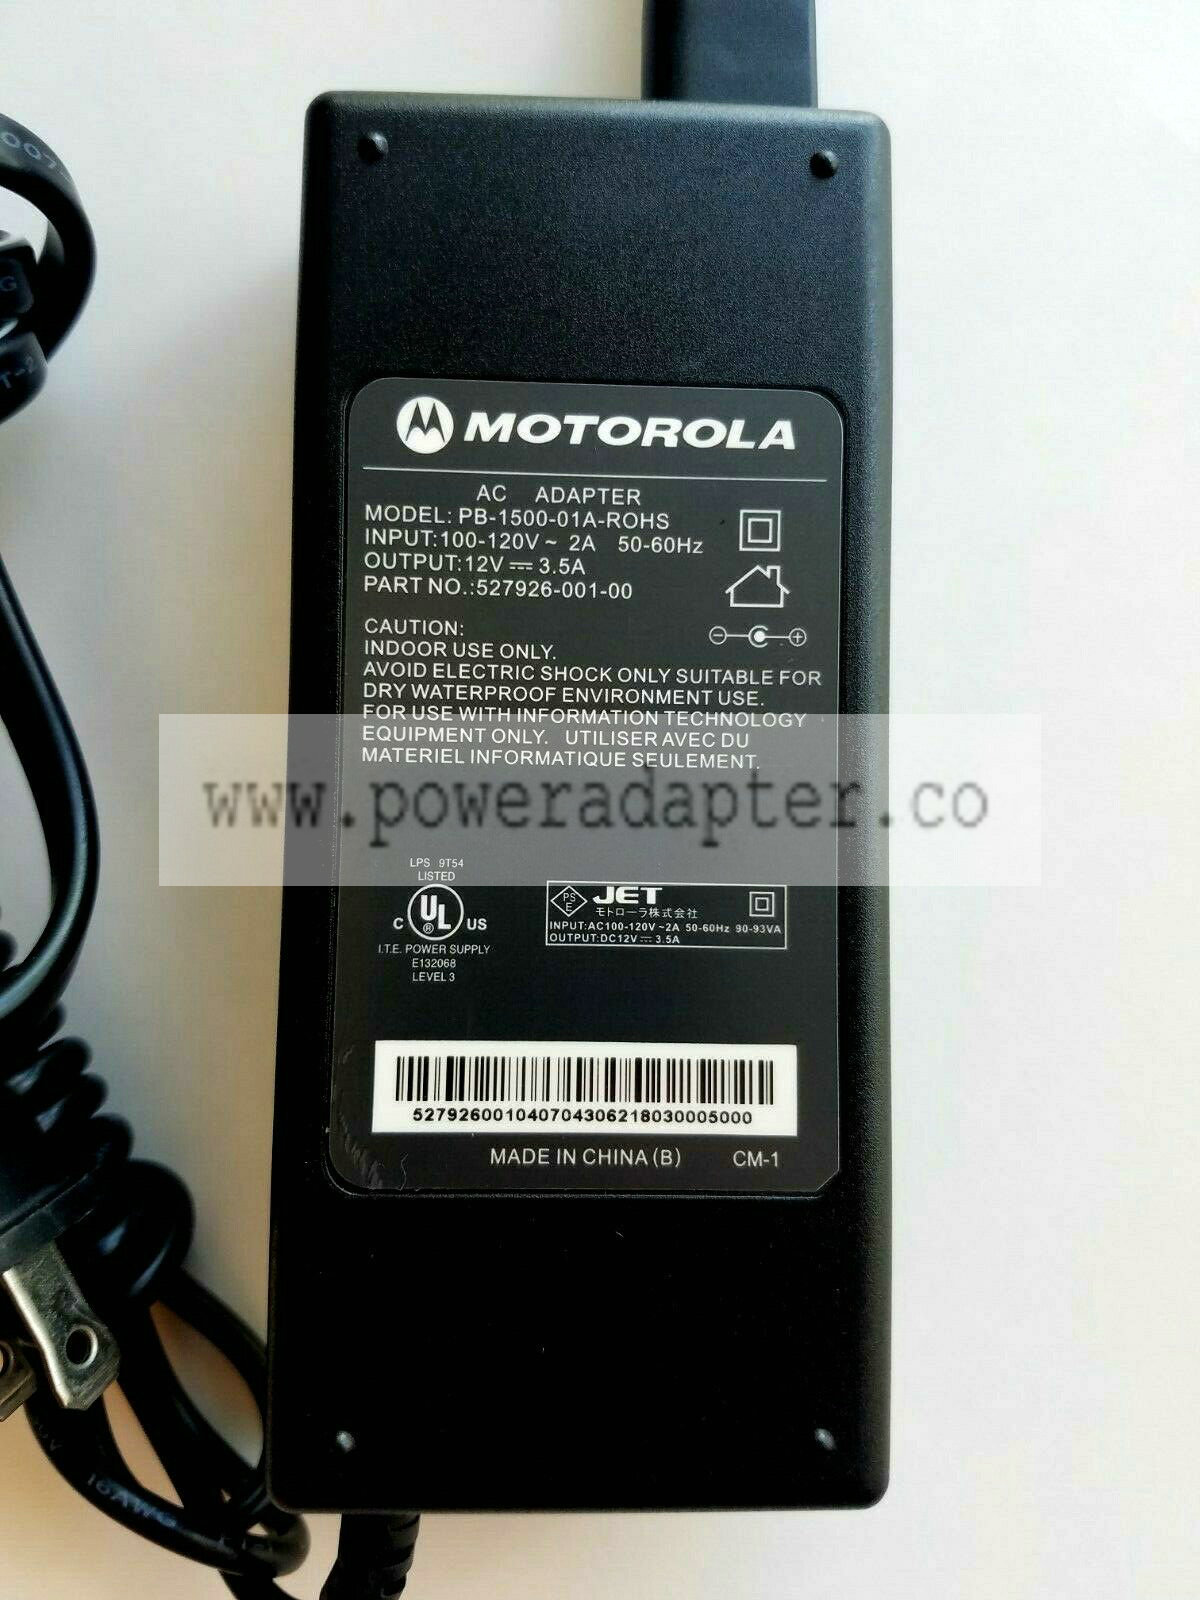 Motorola PB-1500-01A-ROHS AC Adapter Output 12V 3.5A Laptop Power Supply Charger Brand: Motorola Type: Power Adapte